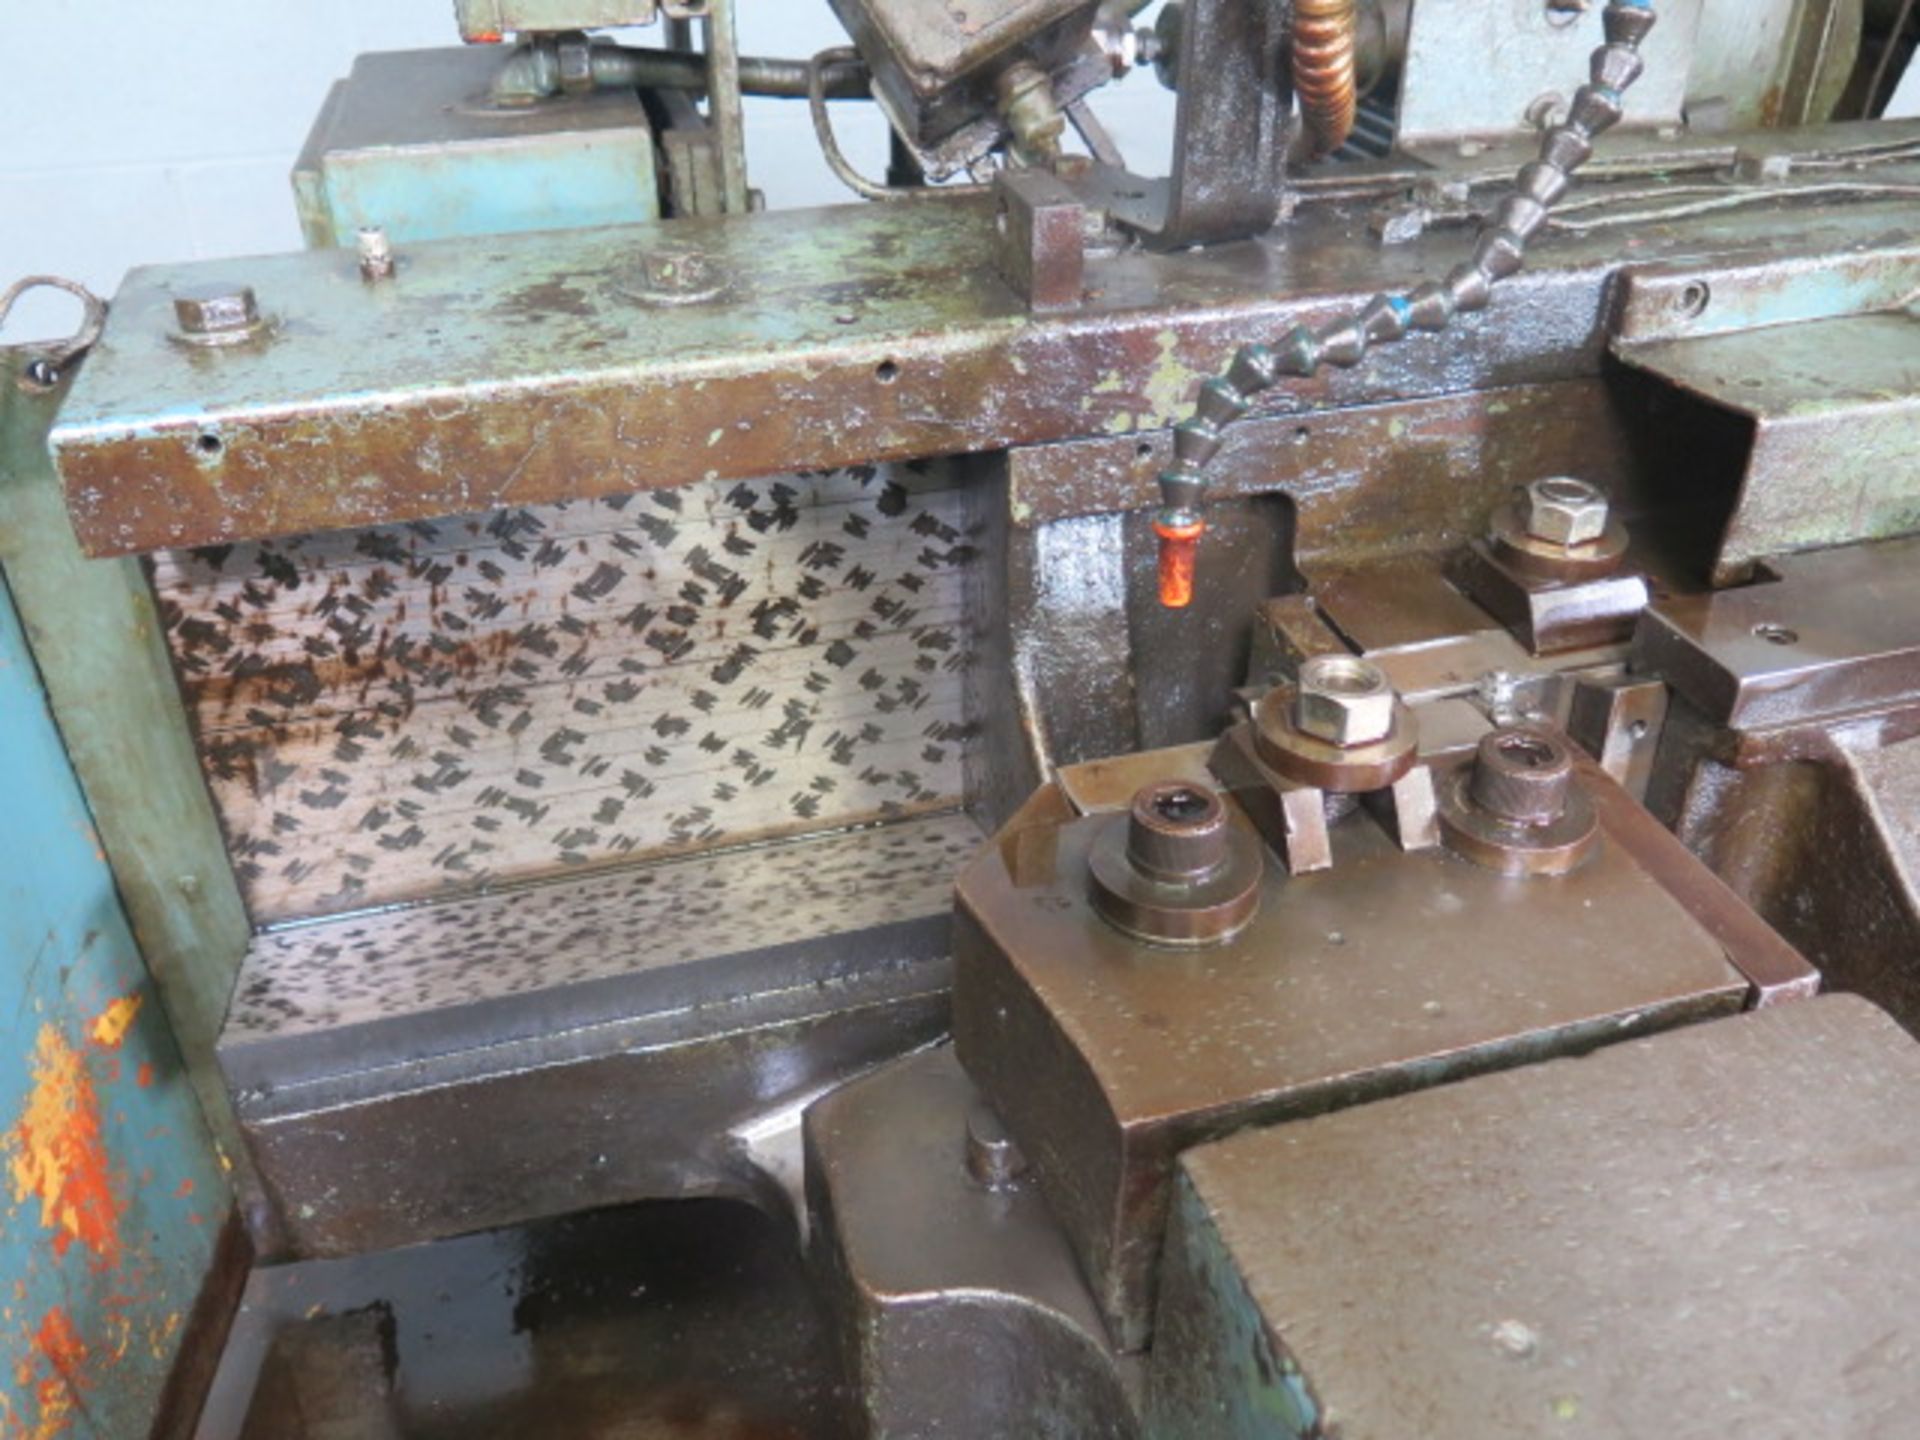 Waterbury Farrel No. 20 Thread Crush Rolling Machine s/n 123270-968 w/ Controlled Speed - Image 4 of 8